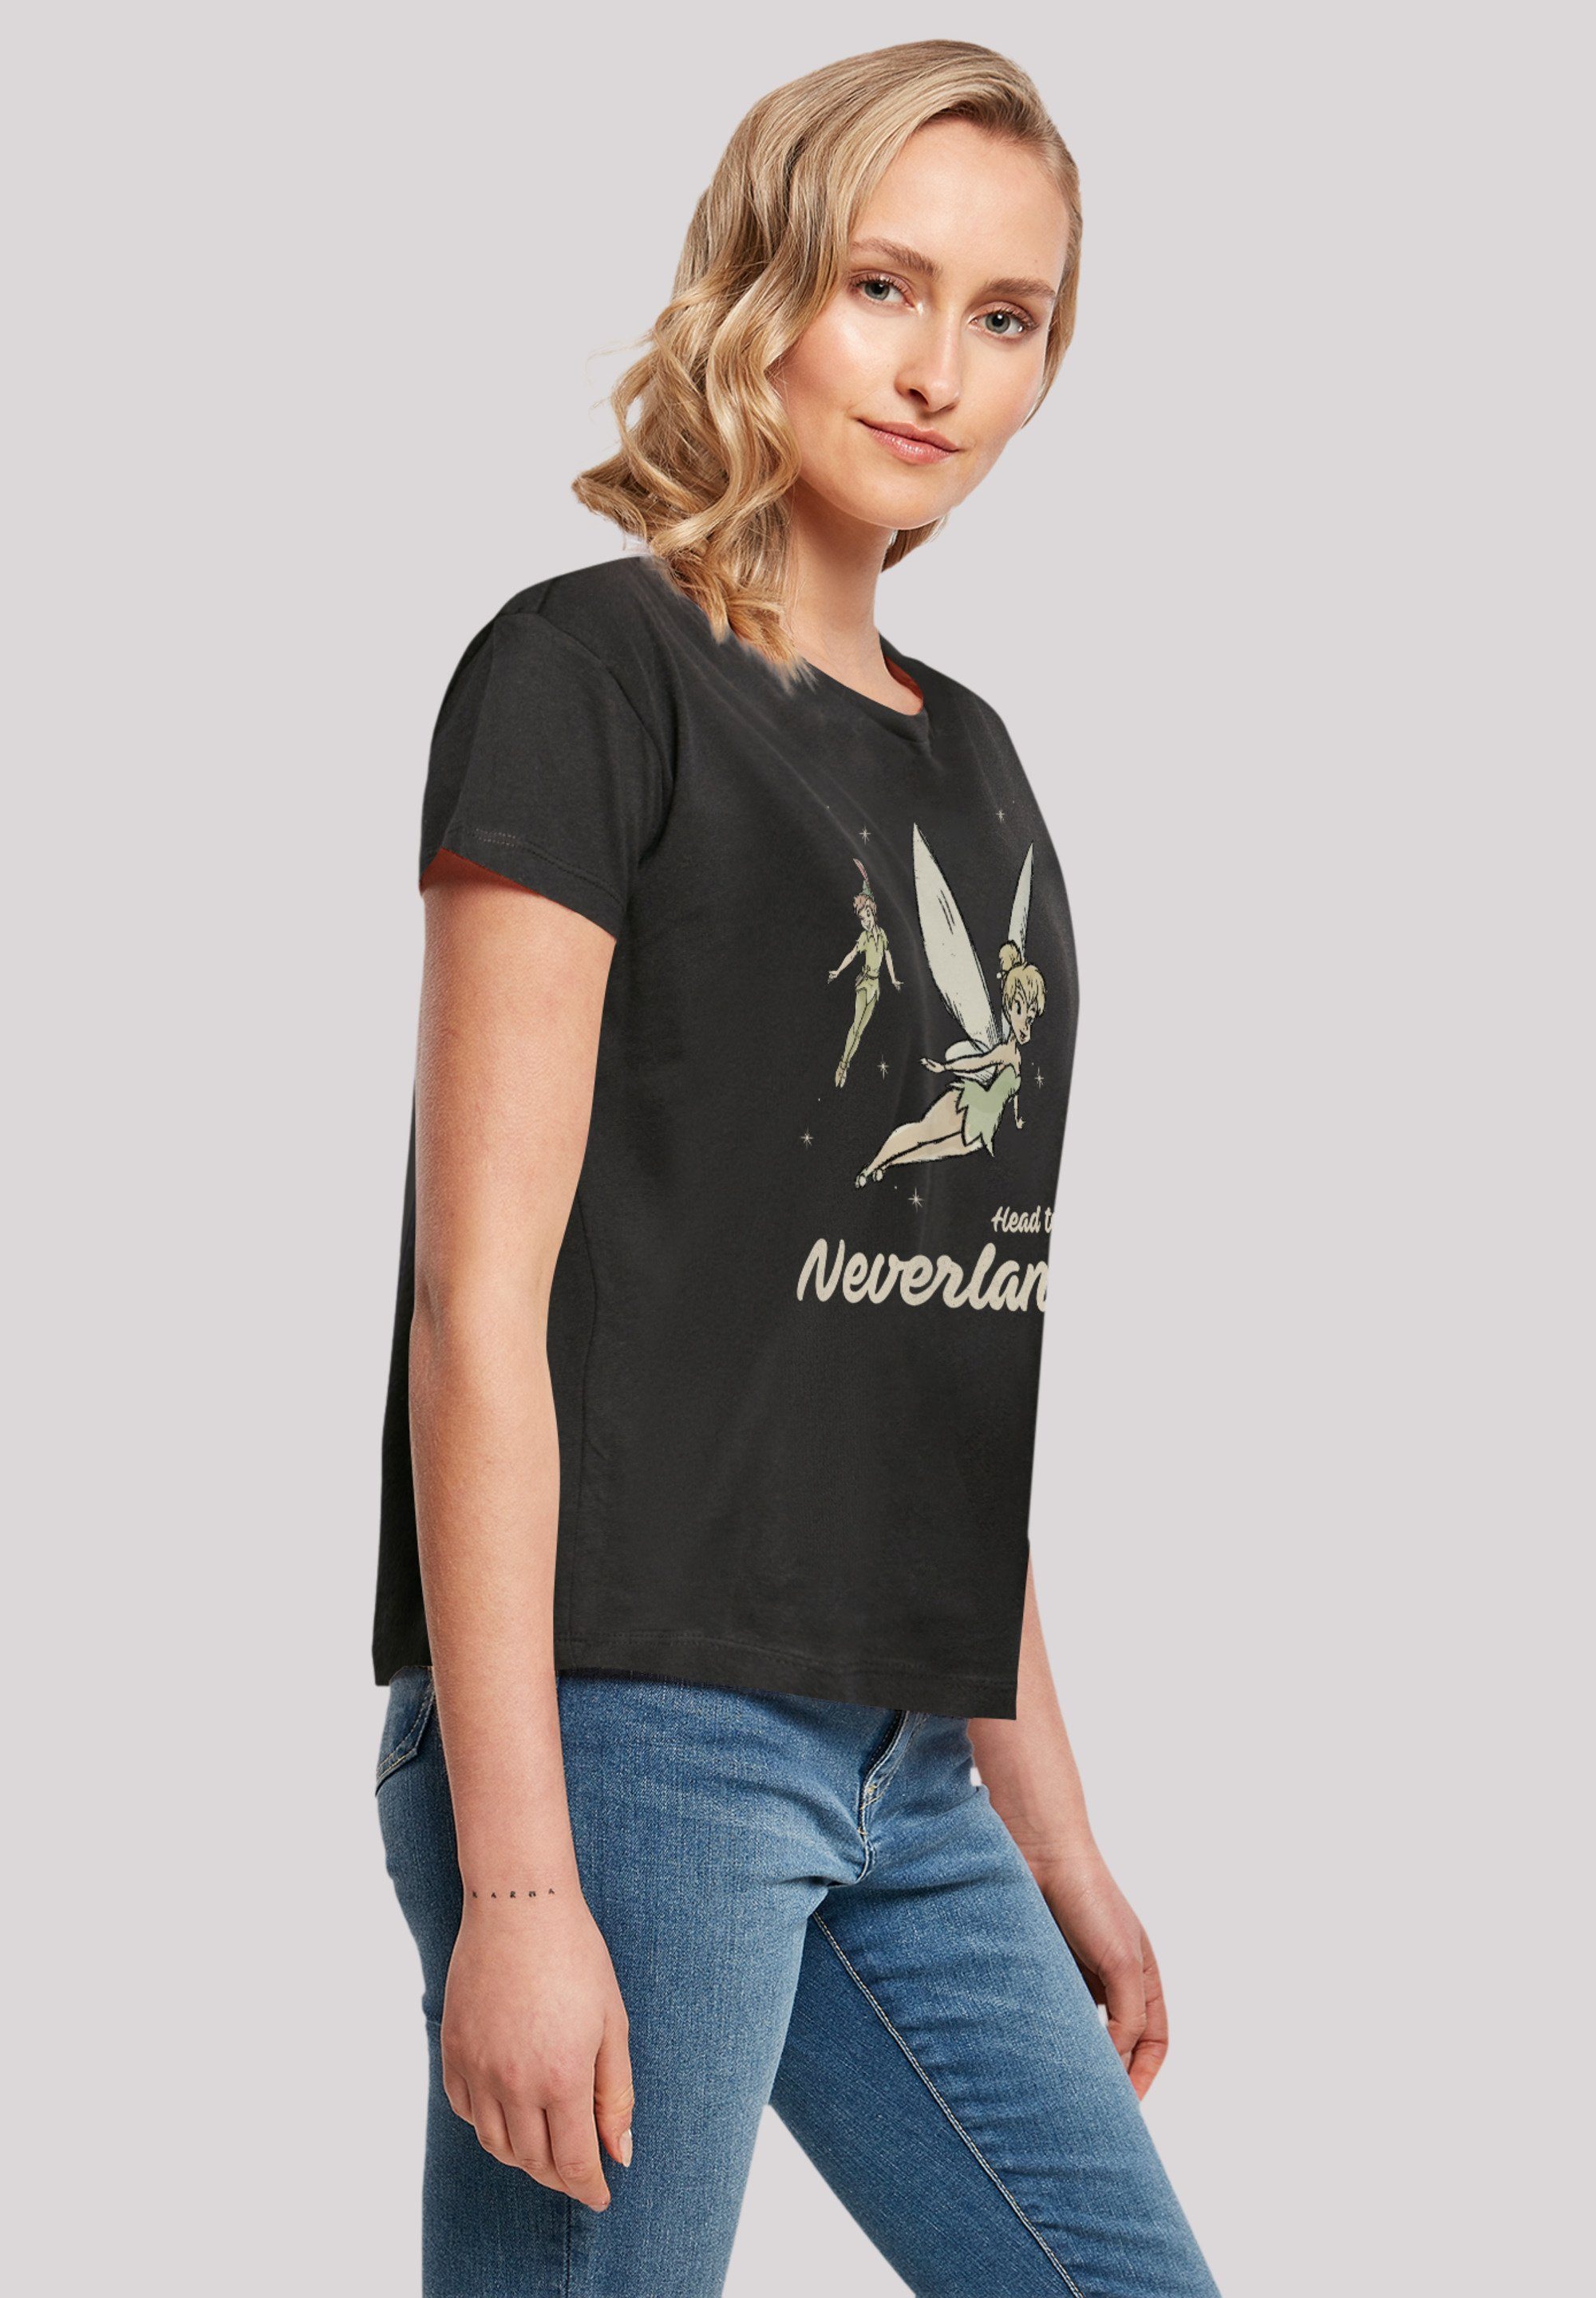 T-Shirt Peter Pan Head Neverland Qualität To Premium F4NT4STIC Disney